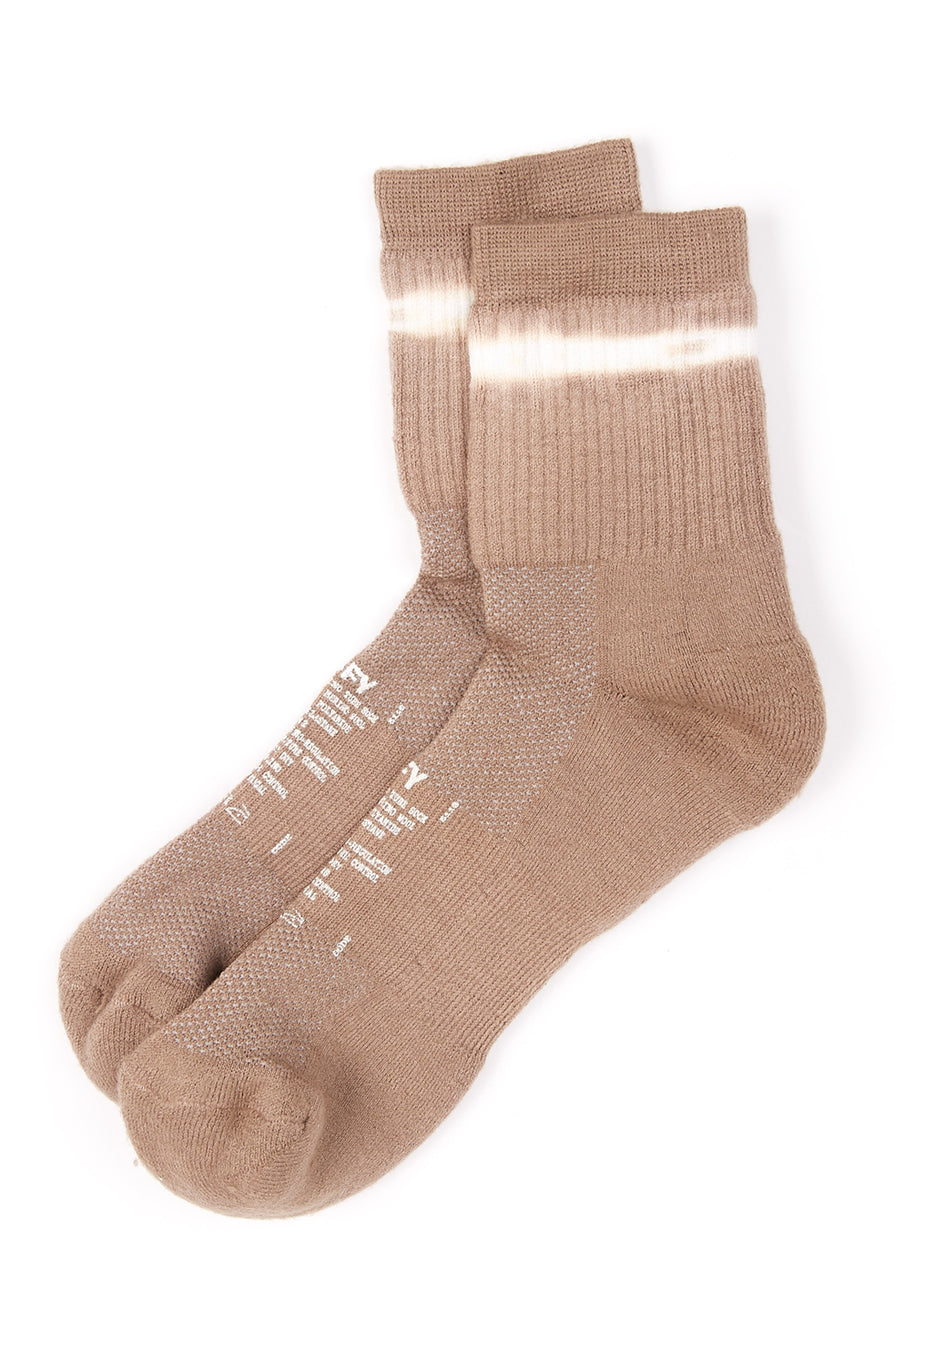 Satisfy Men's Merino Tube Socks - Greige Tie-Dye